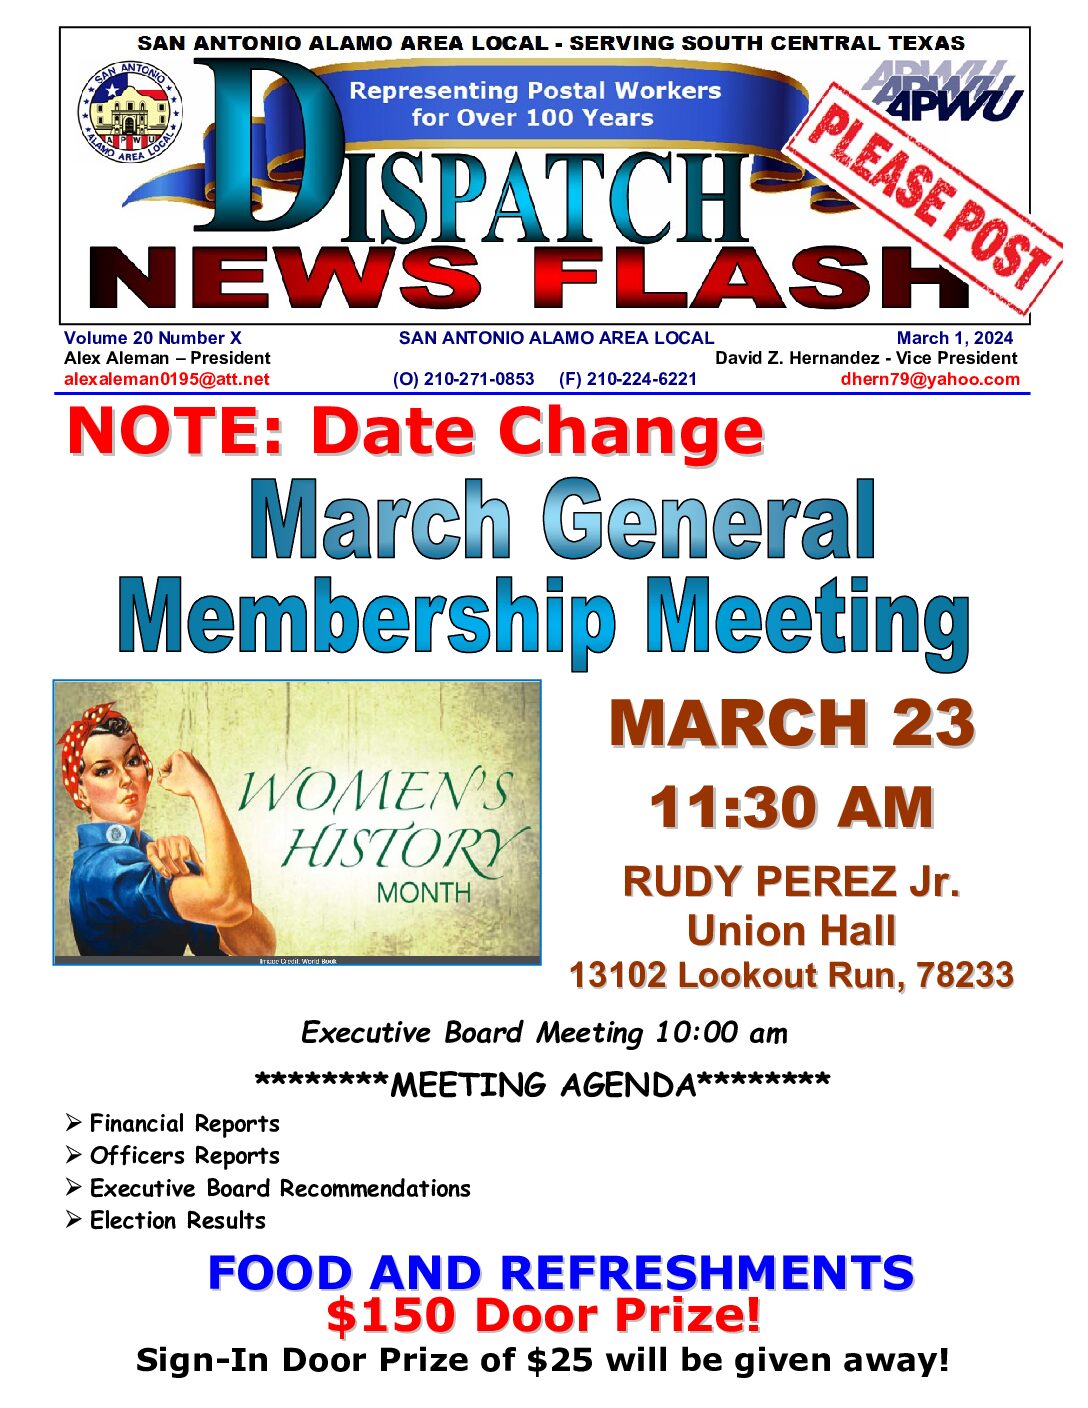 NewsFlash 20-8 March General Membership Meeting Notice - 